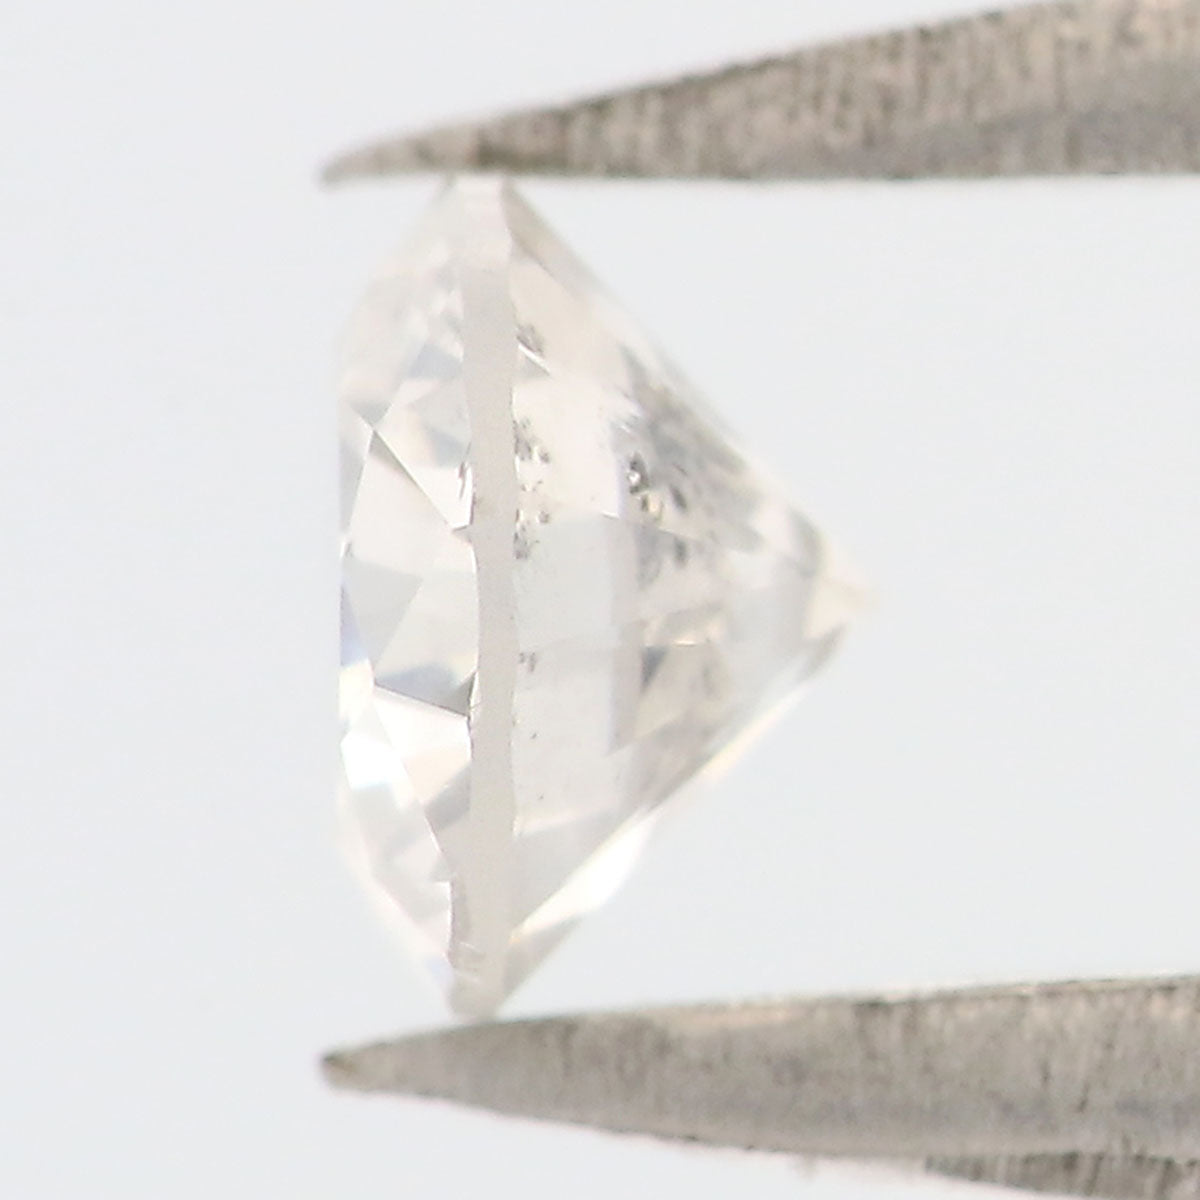 Natural Loose Round Brilliant Cut Diamond White Color 0.21 CT 3.70 MM Round Shape Brilliant Cut Diamond KR2489